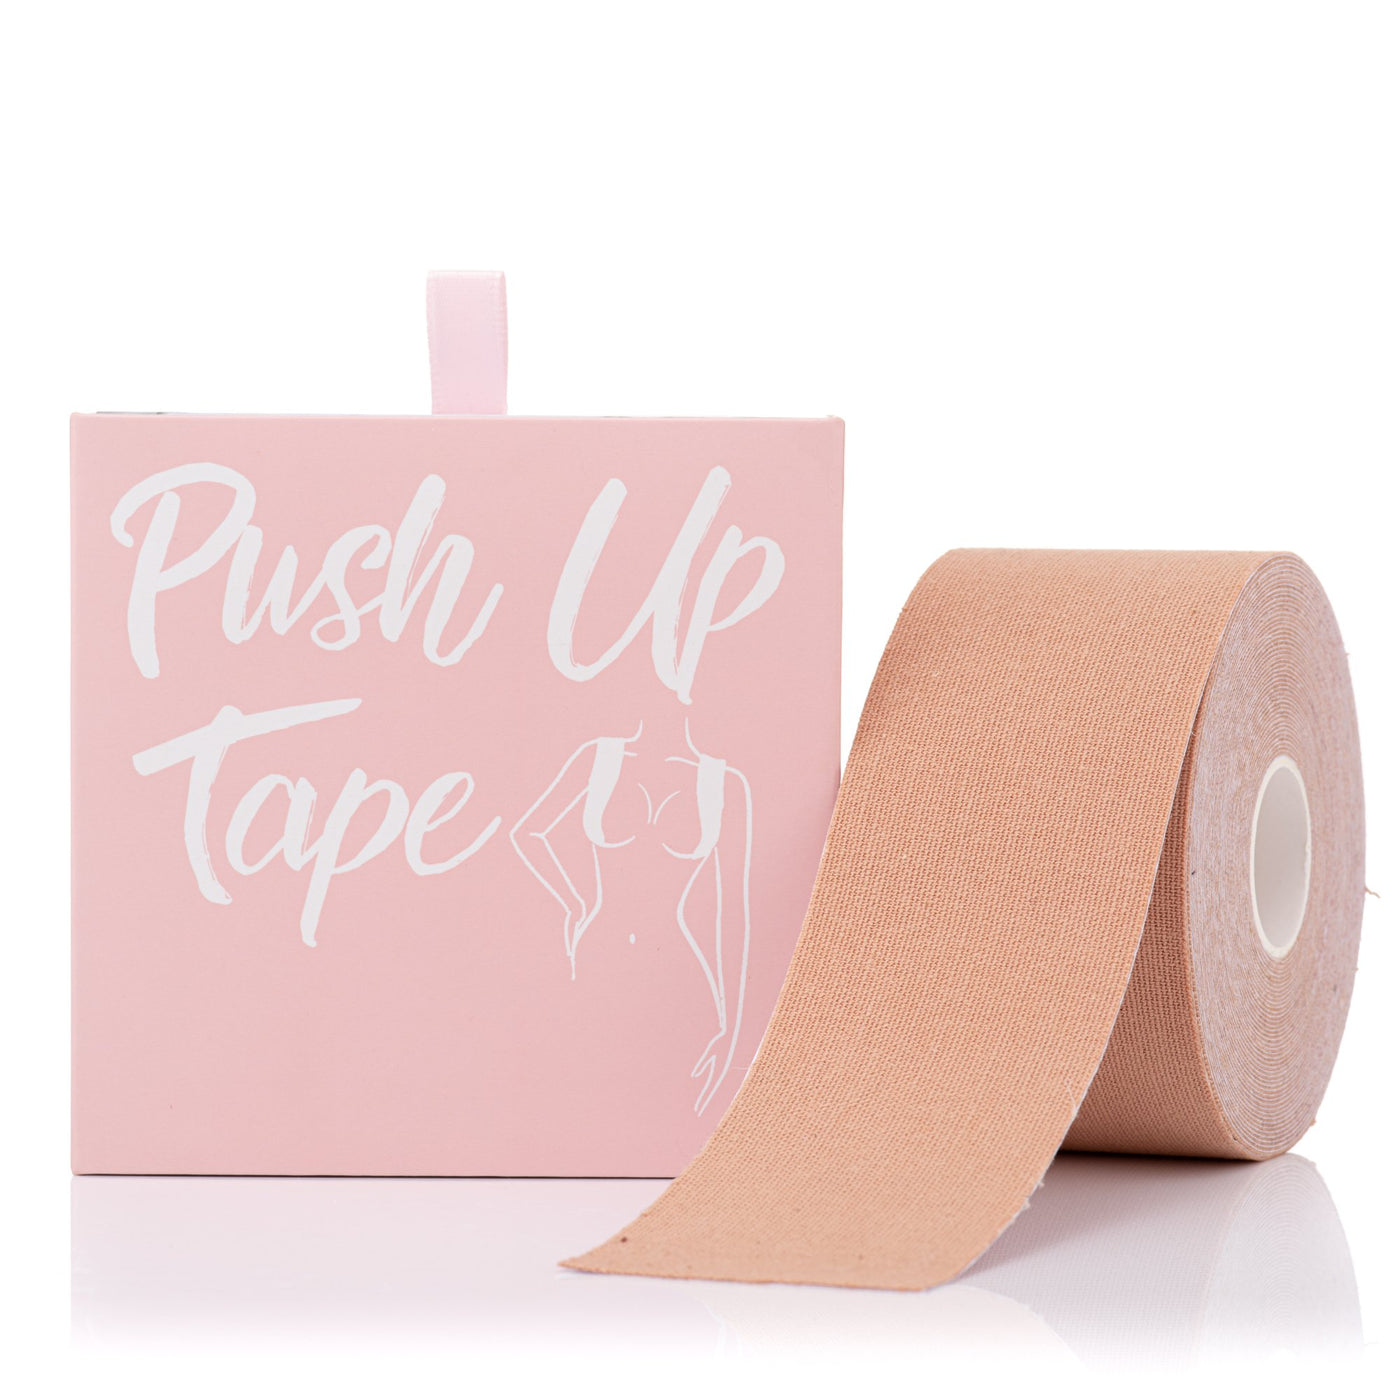 Push Up Tape - Vanilla Tan – My Bare Essentials